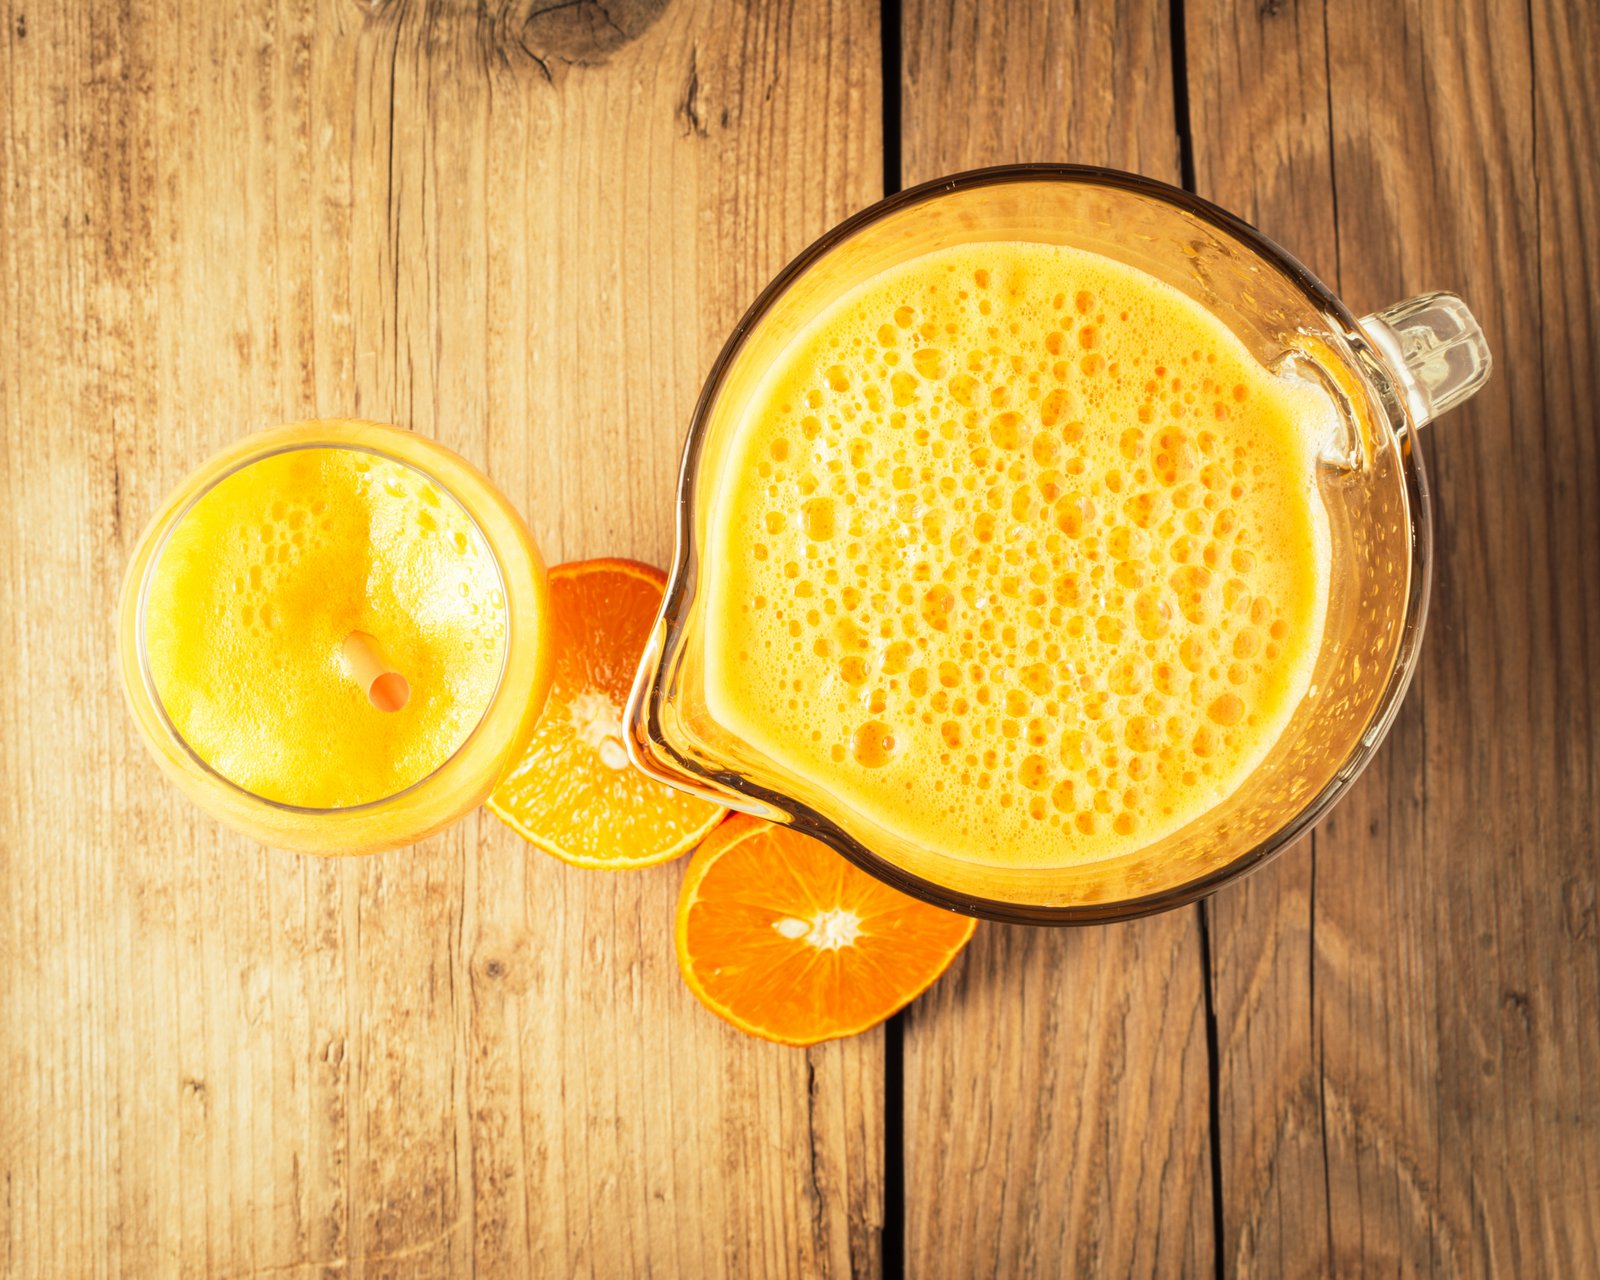 https://www.archanaskitchen.com/images/archanaskitchen/1-Author/Archana_Doshi/homemade-fresh-orange-juice-recipe.jpg